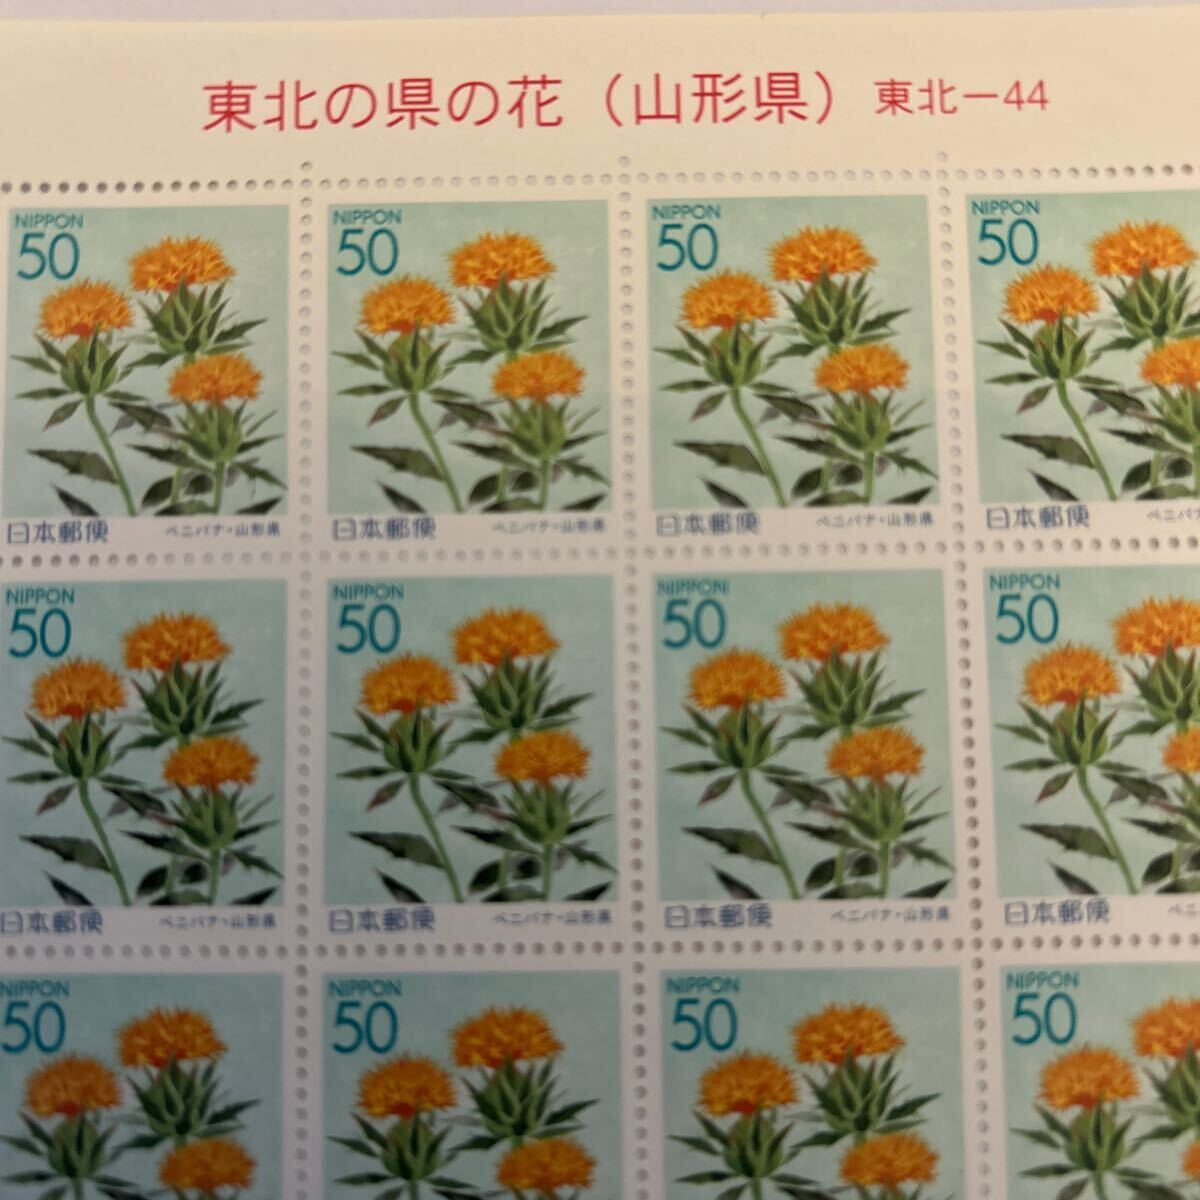  Tohoku. prefecture. flower red bana Yamagata prefecture stamp 